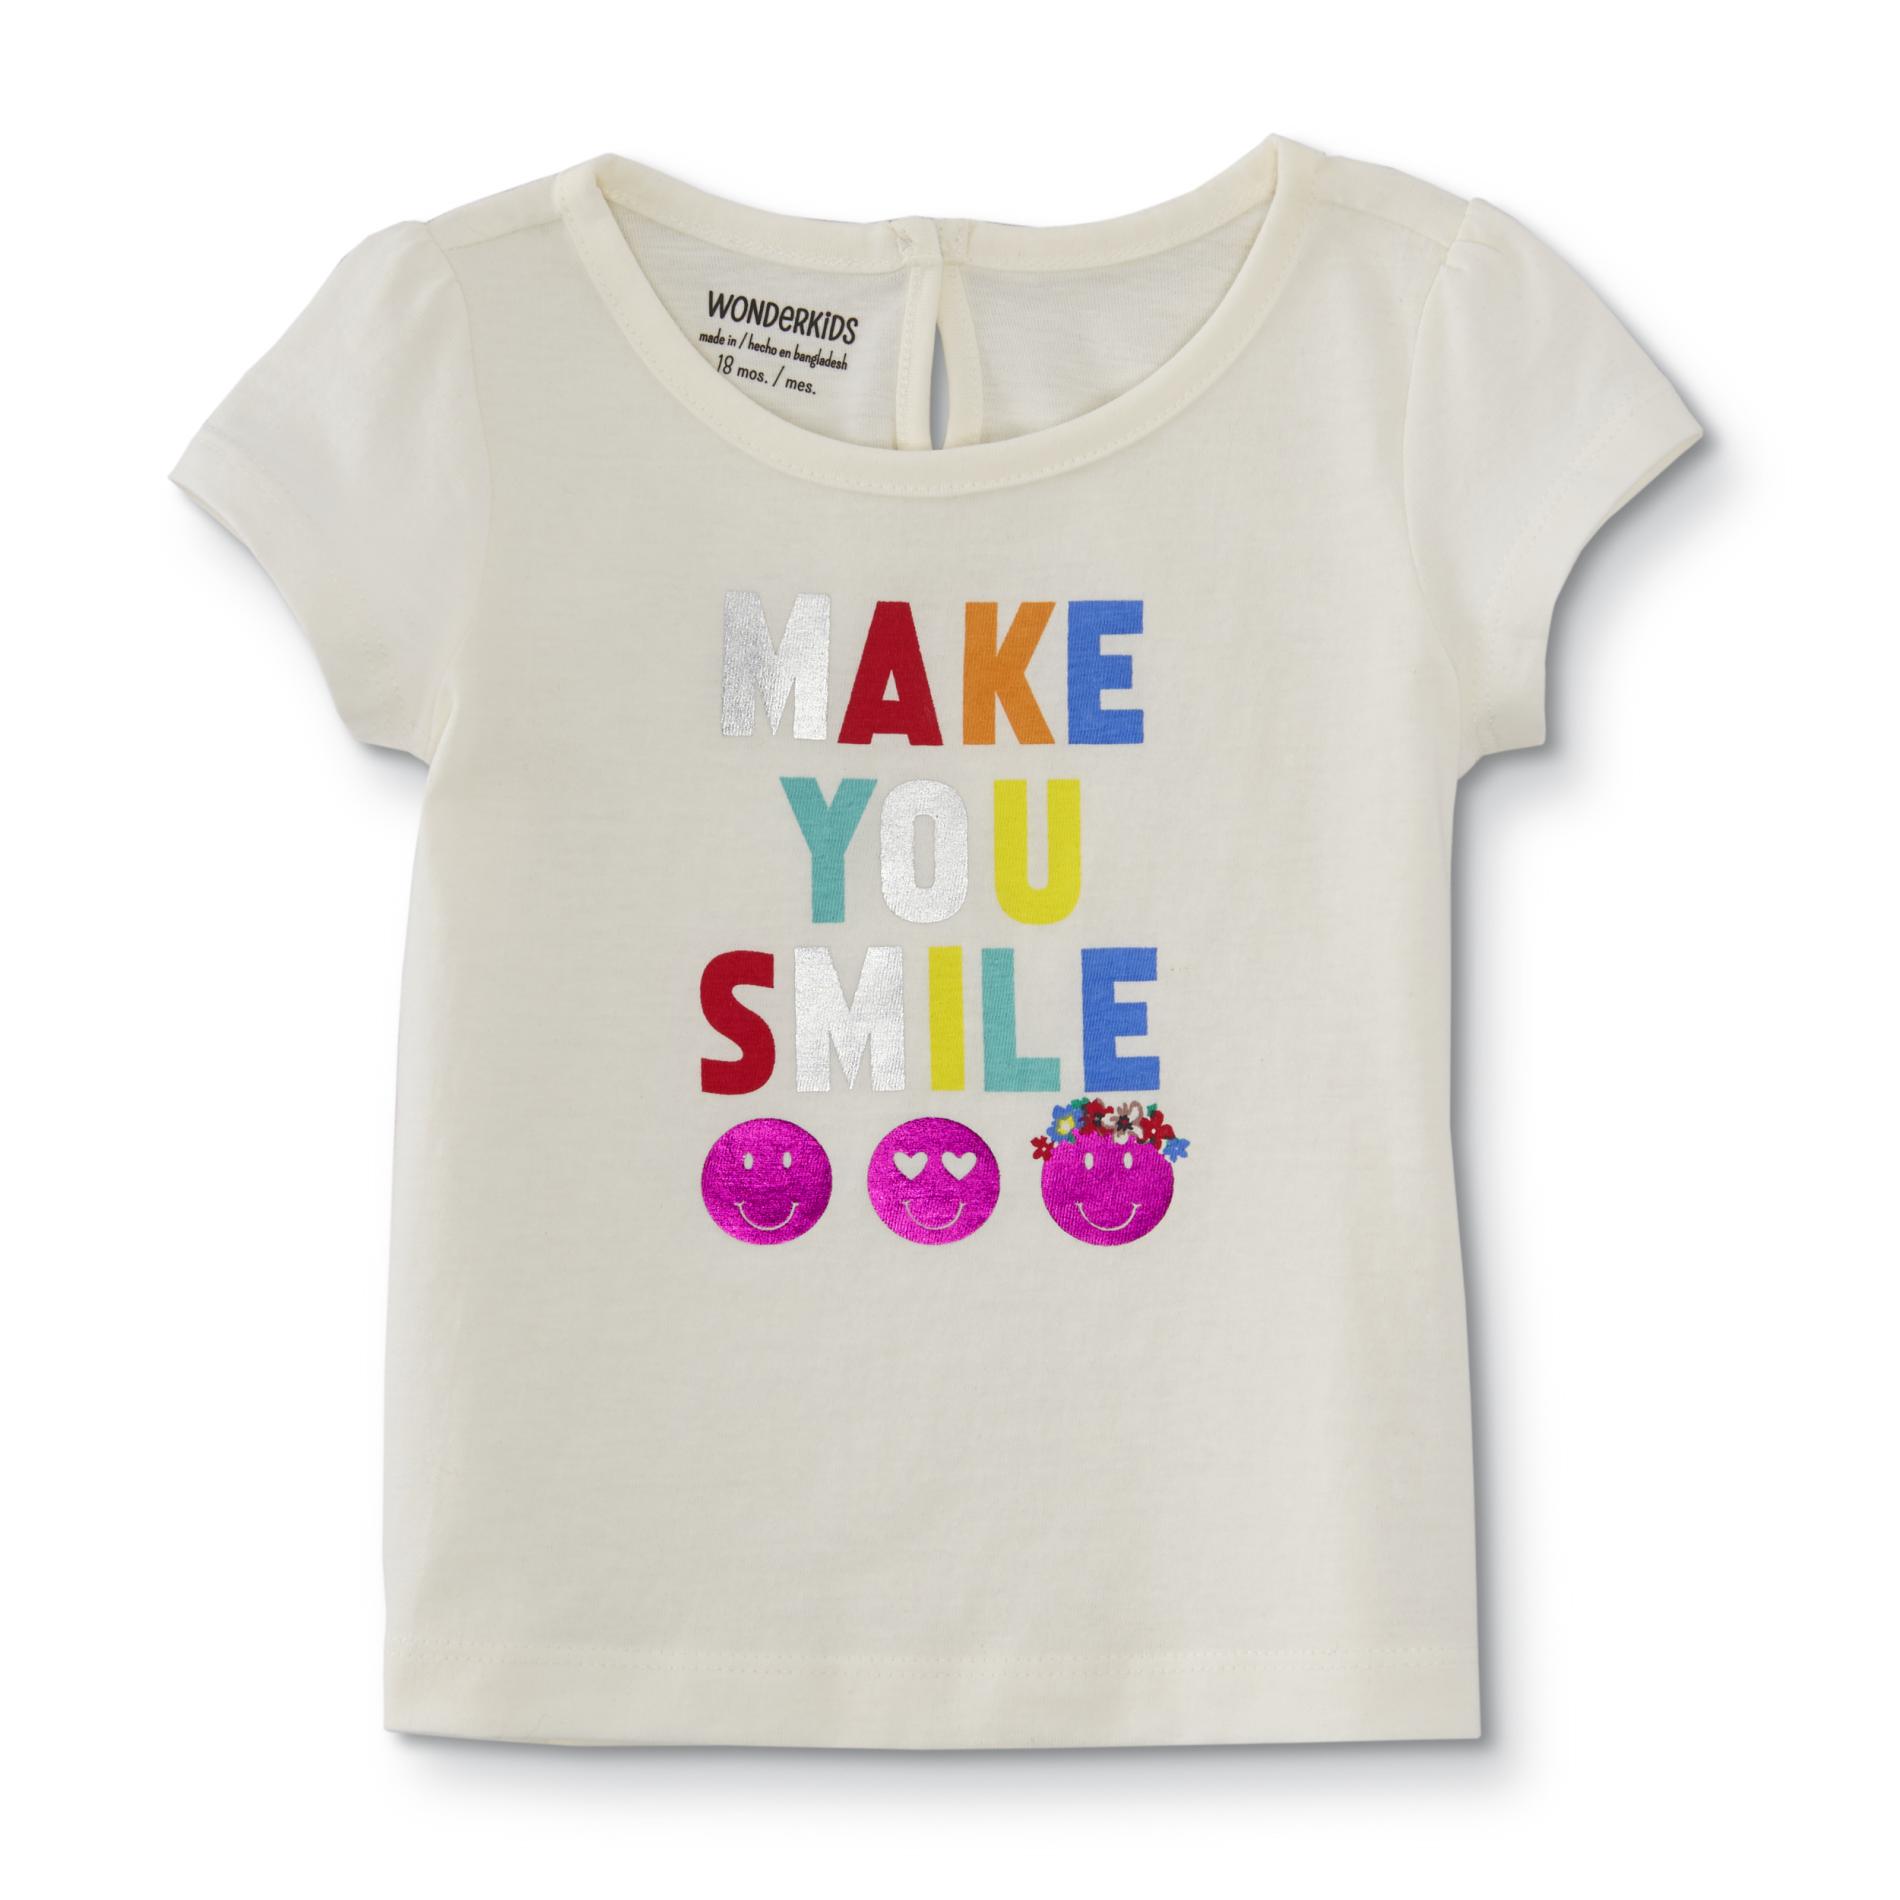 WonderKids Infant & Toddler Girls' Graphic T-Shirt - Make You Smile